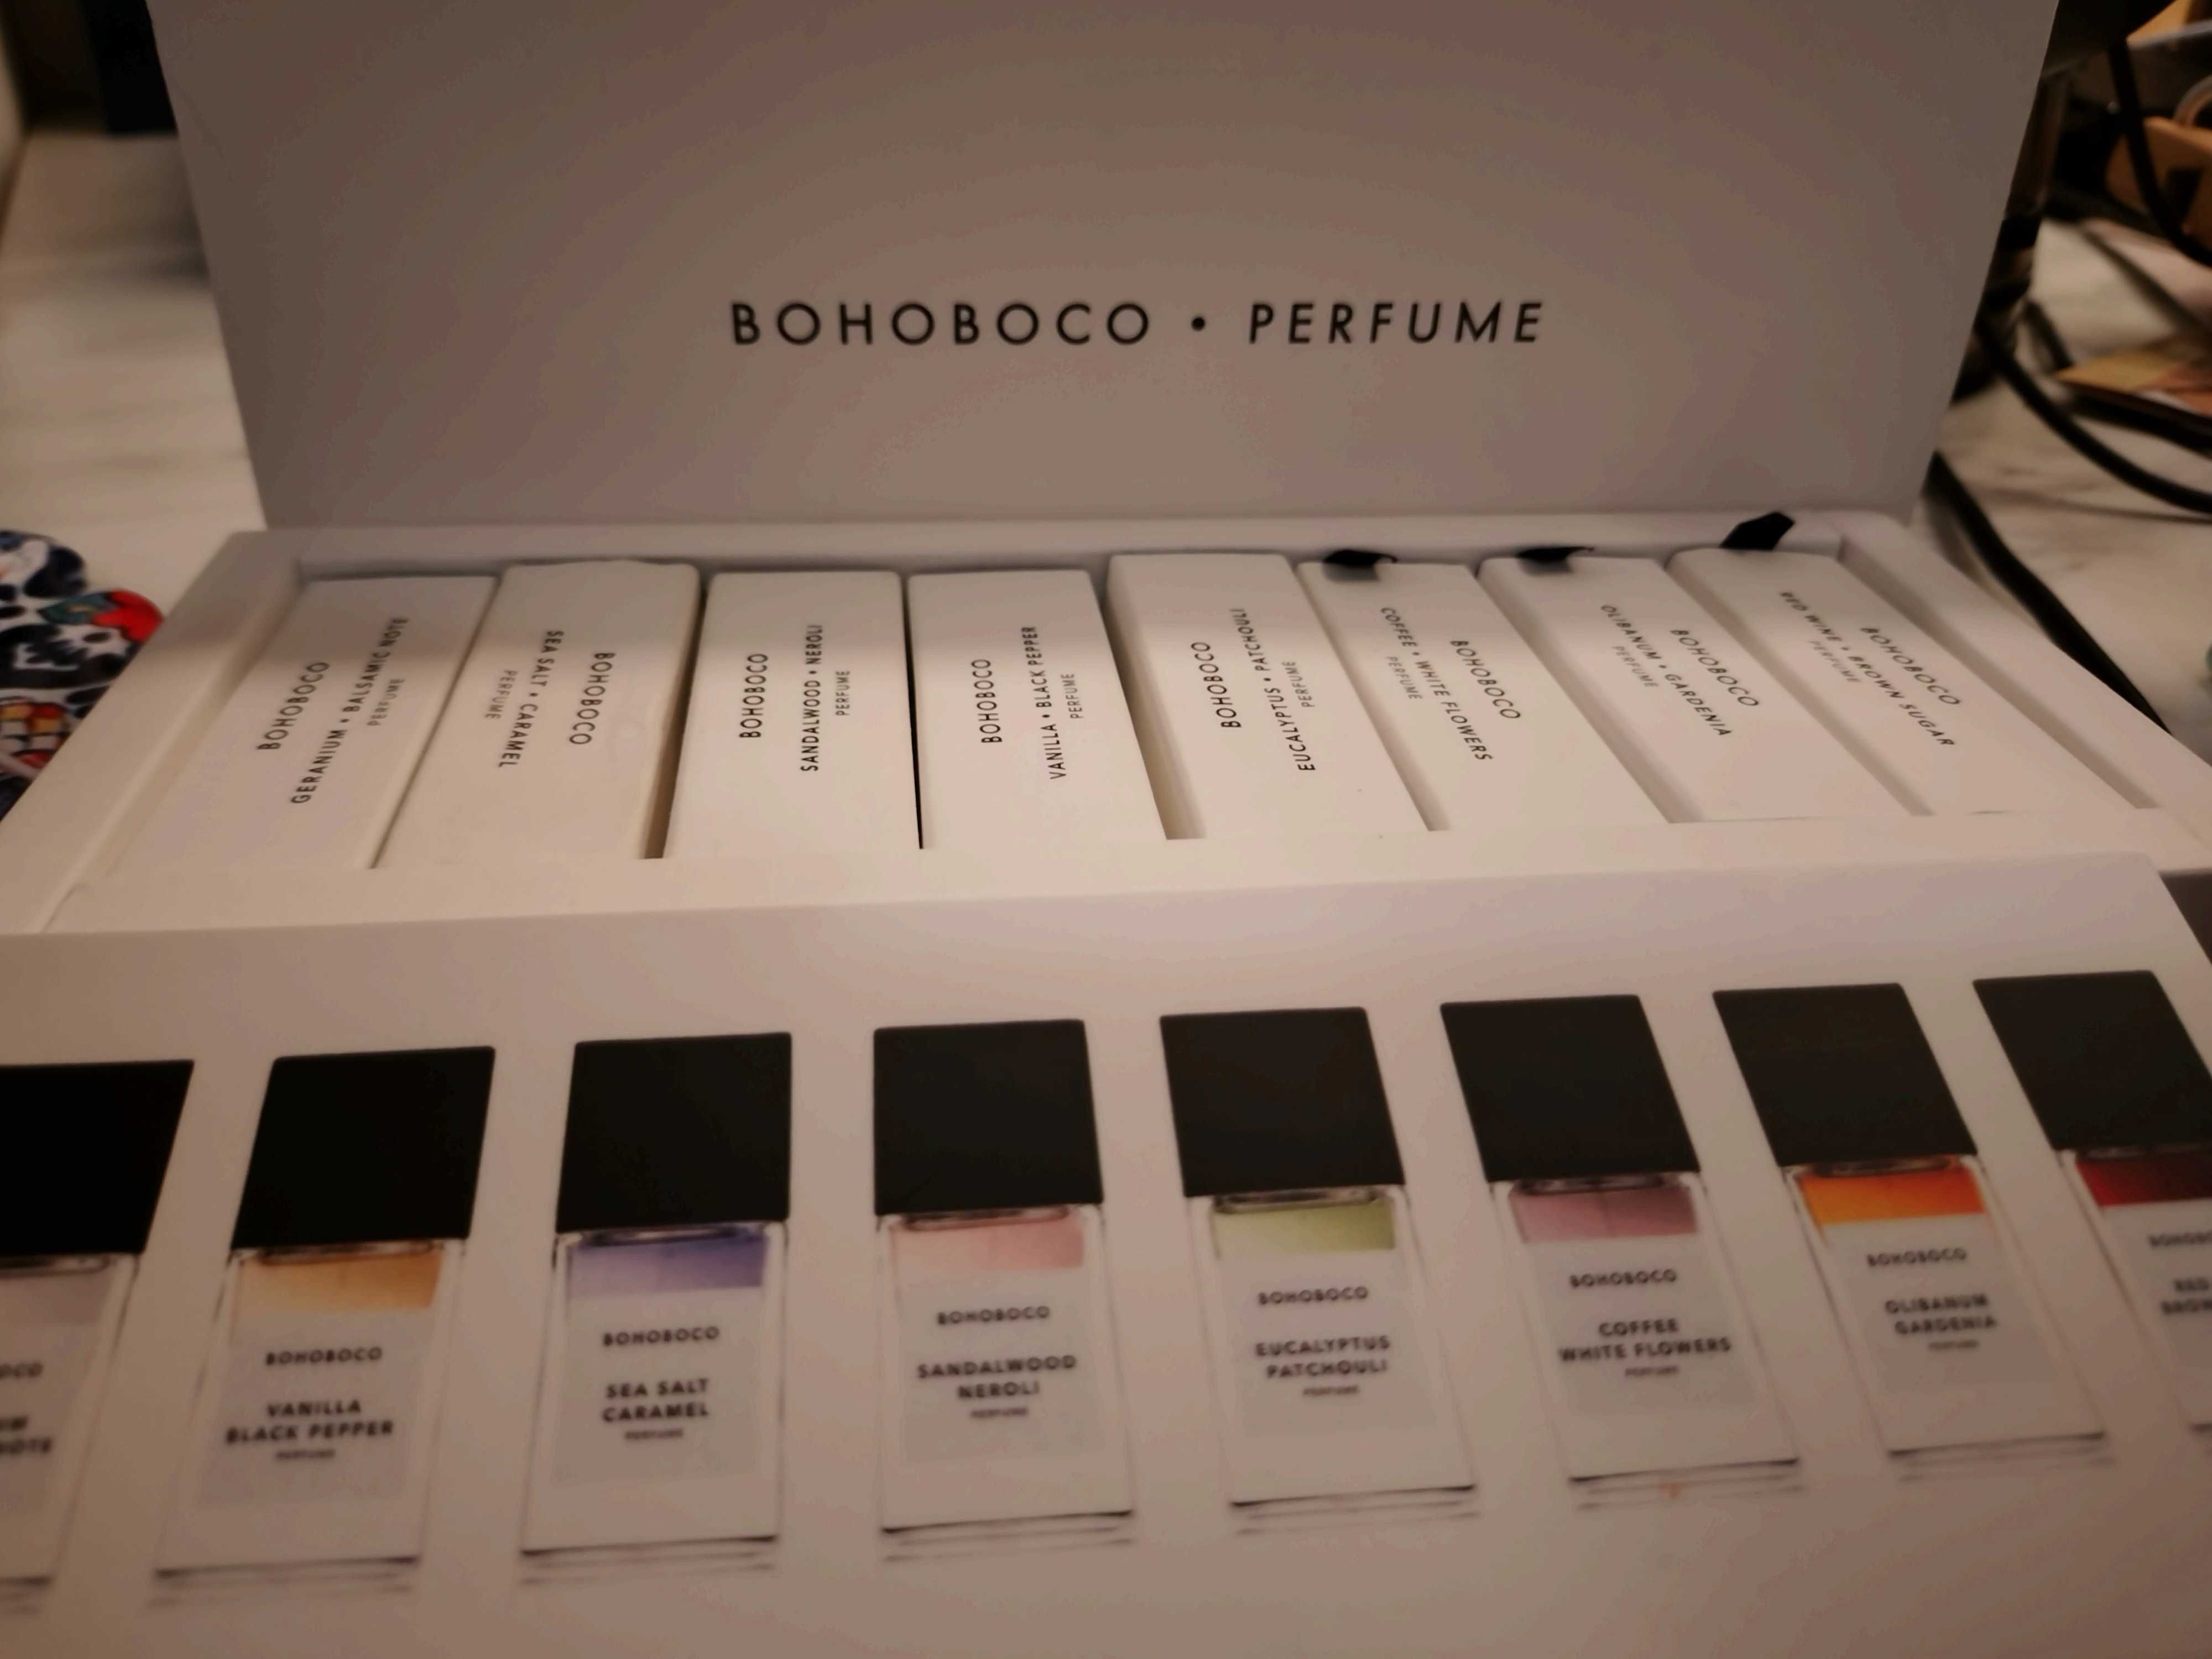 Bohoboco perfumki set